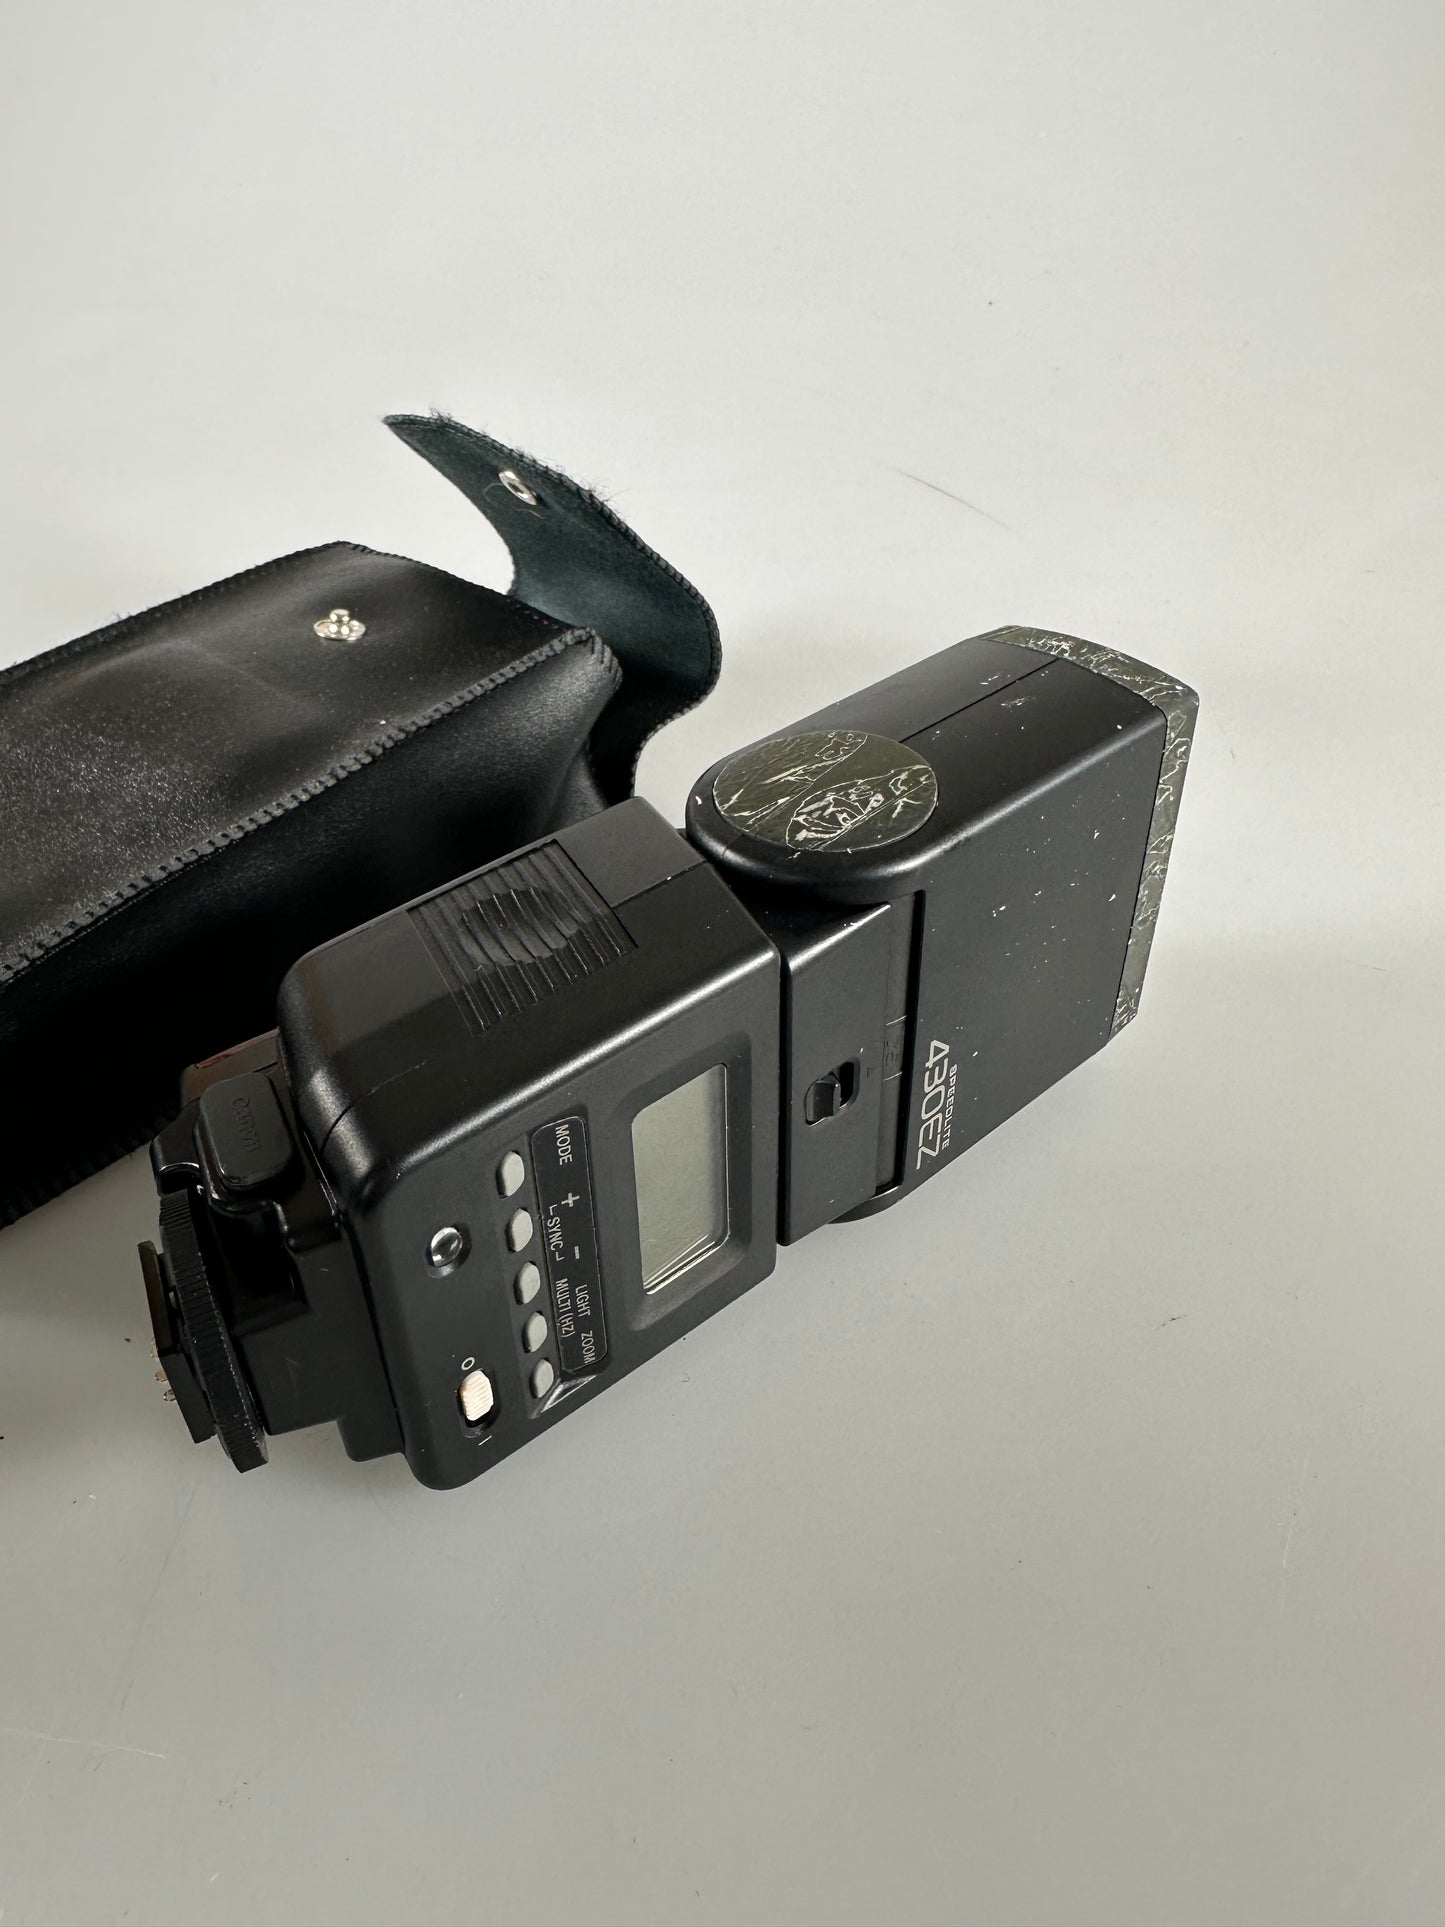 Canon 430EZ Speedlite Shoe Mount Flash with case